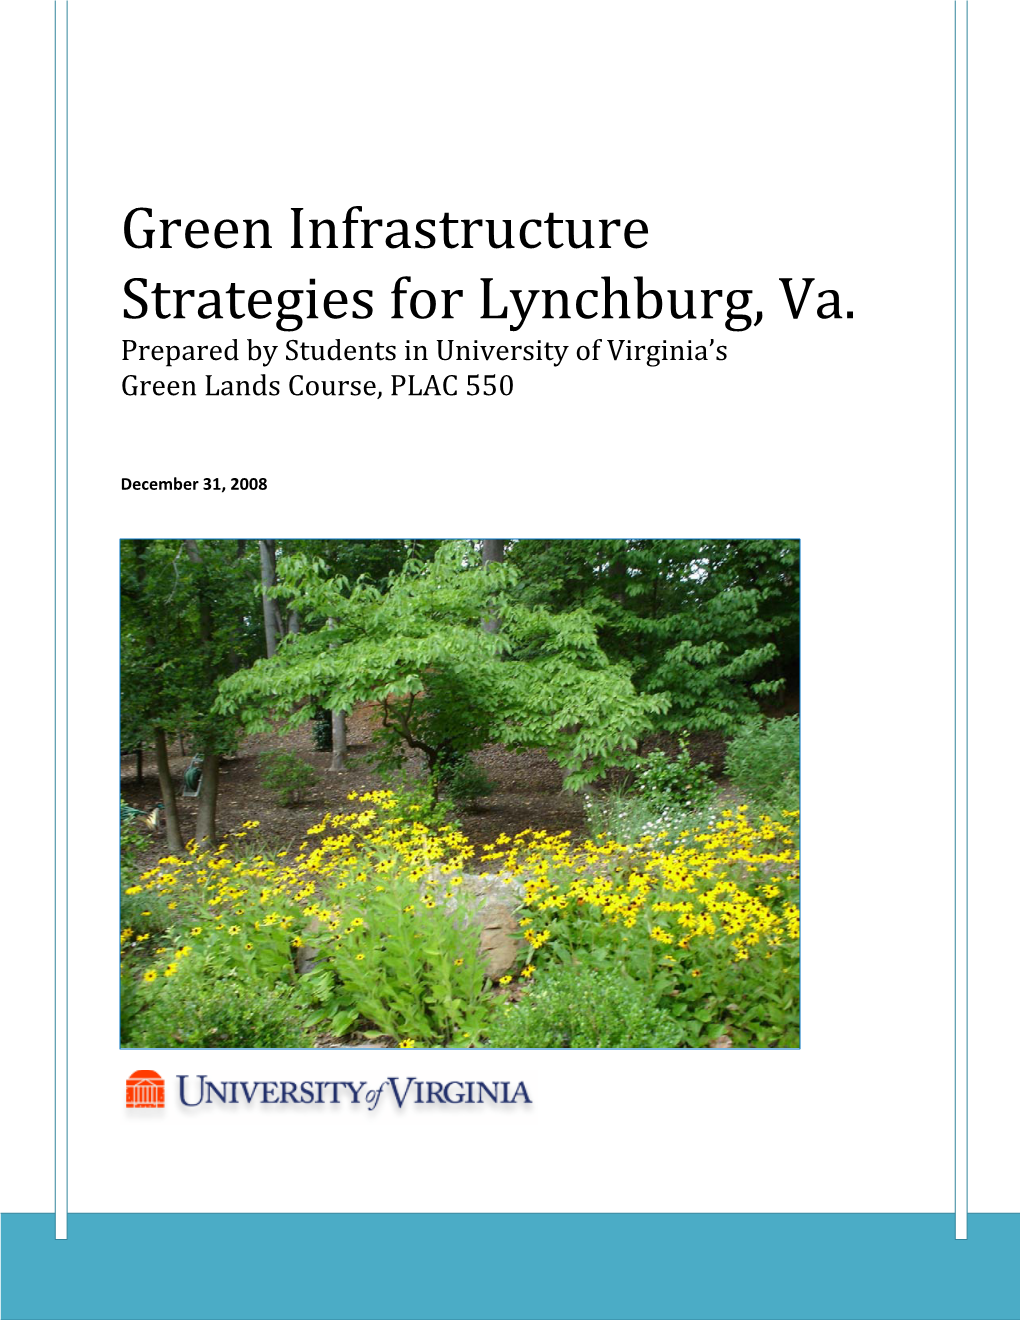 Green Infrastructure Strategies for Lynchburg, Virgina